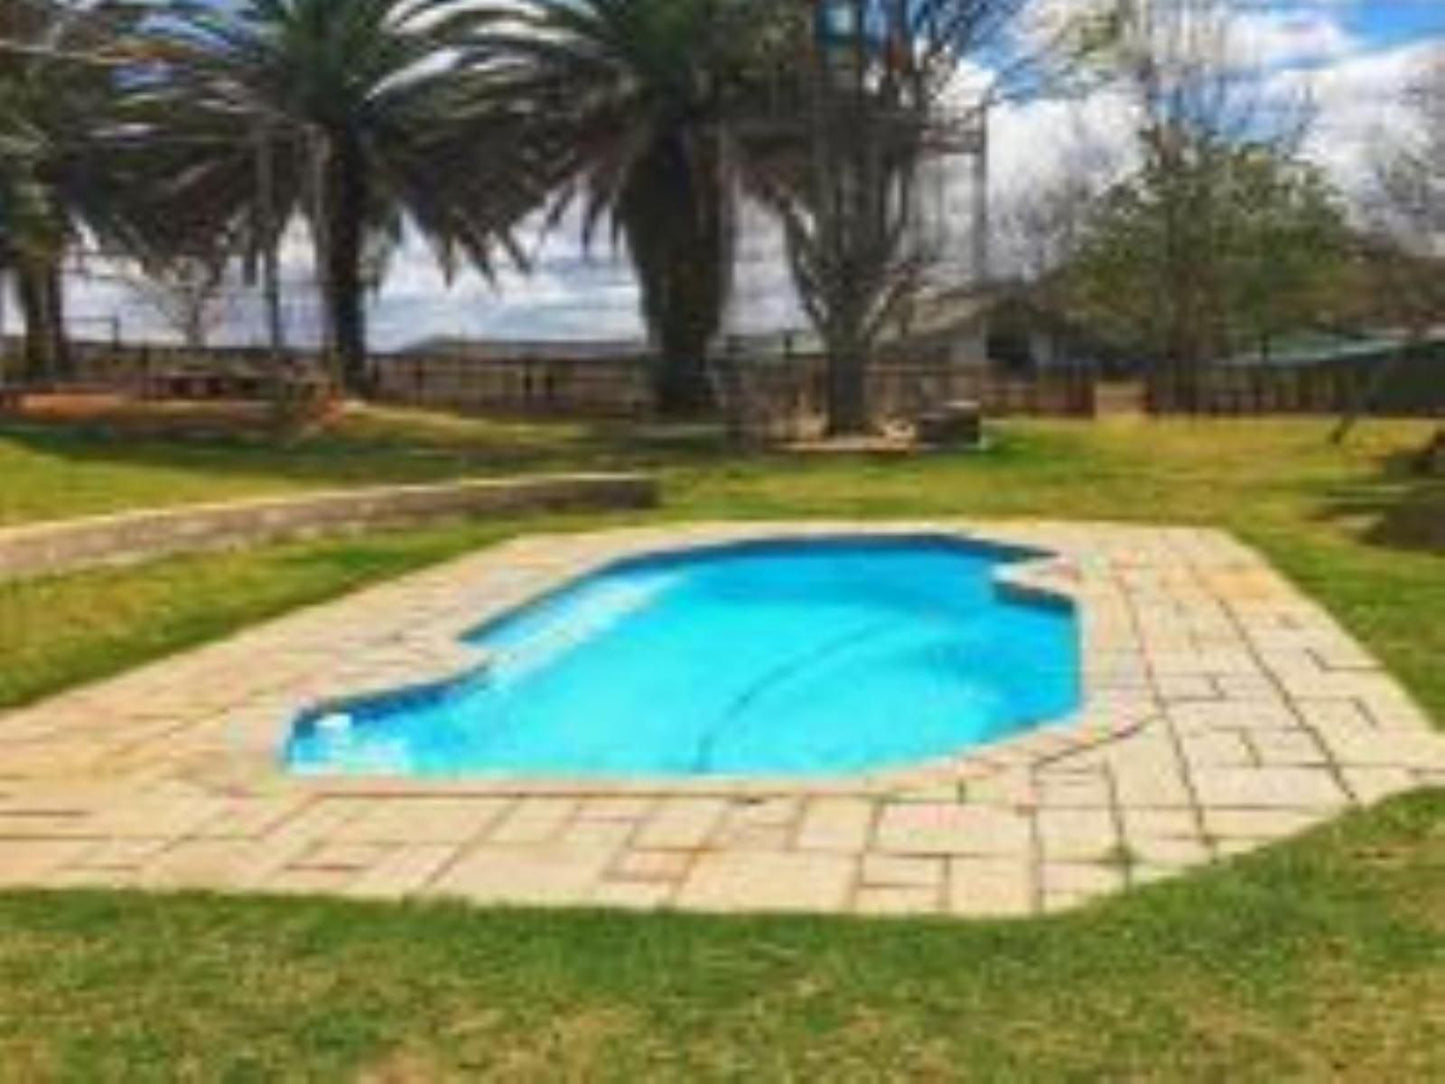 Emahlathini Farm Lodge Piet Retief Mpumalanga South Africa Garden, Nature, Plant, Swimming Pool